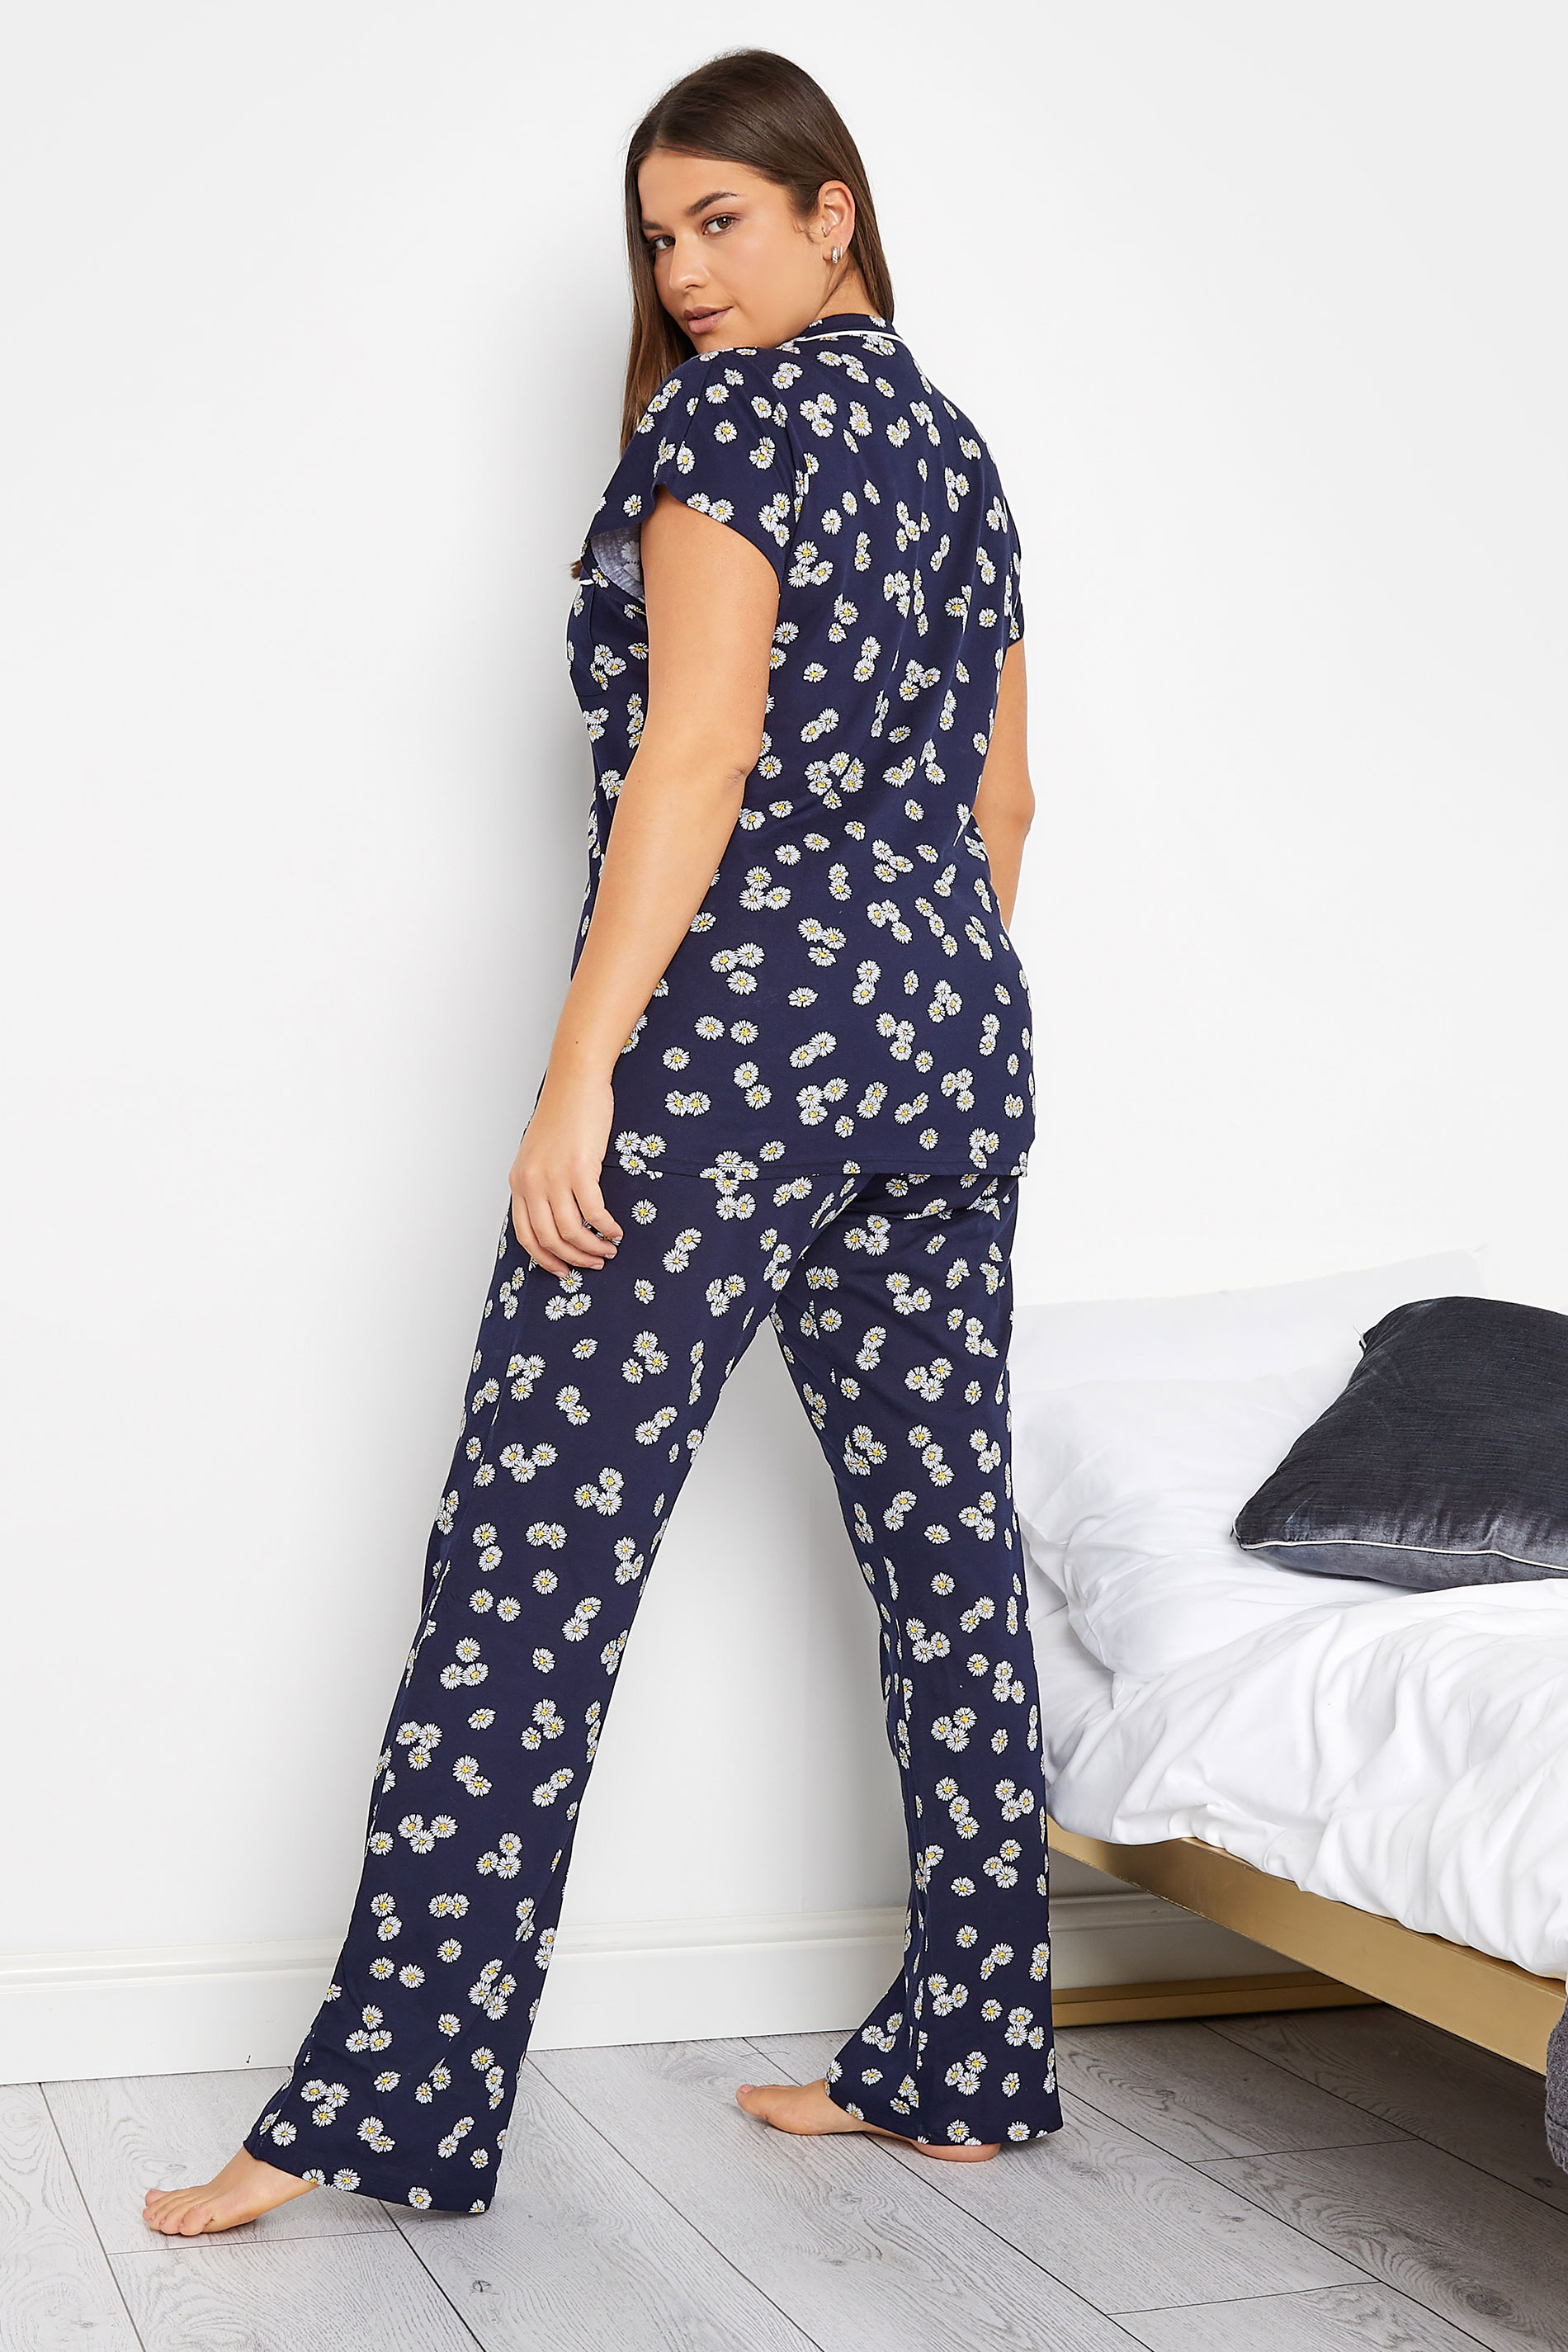 Tall Women's LTS Tall Navy Blue Daisy Print Cotton Pyjama Set | Long Tall Sally  3